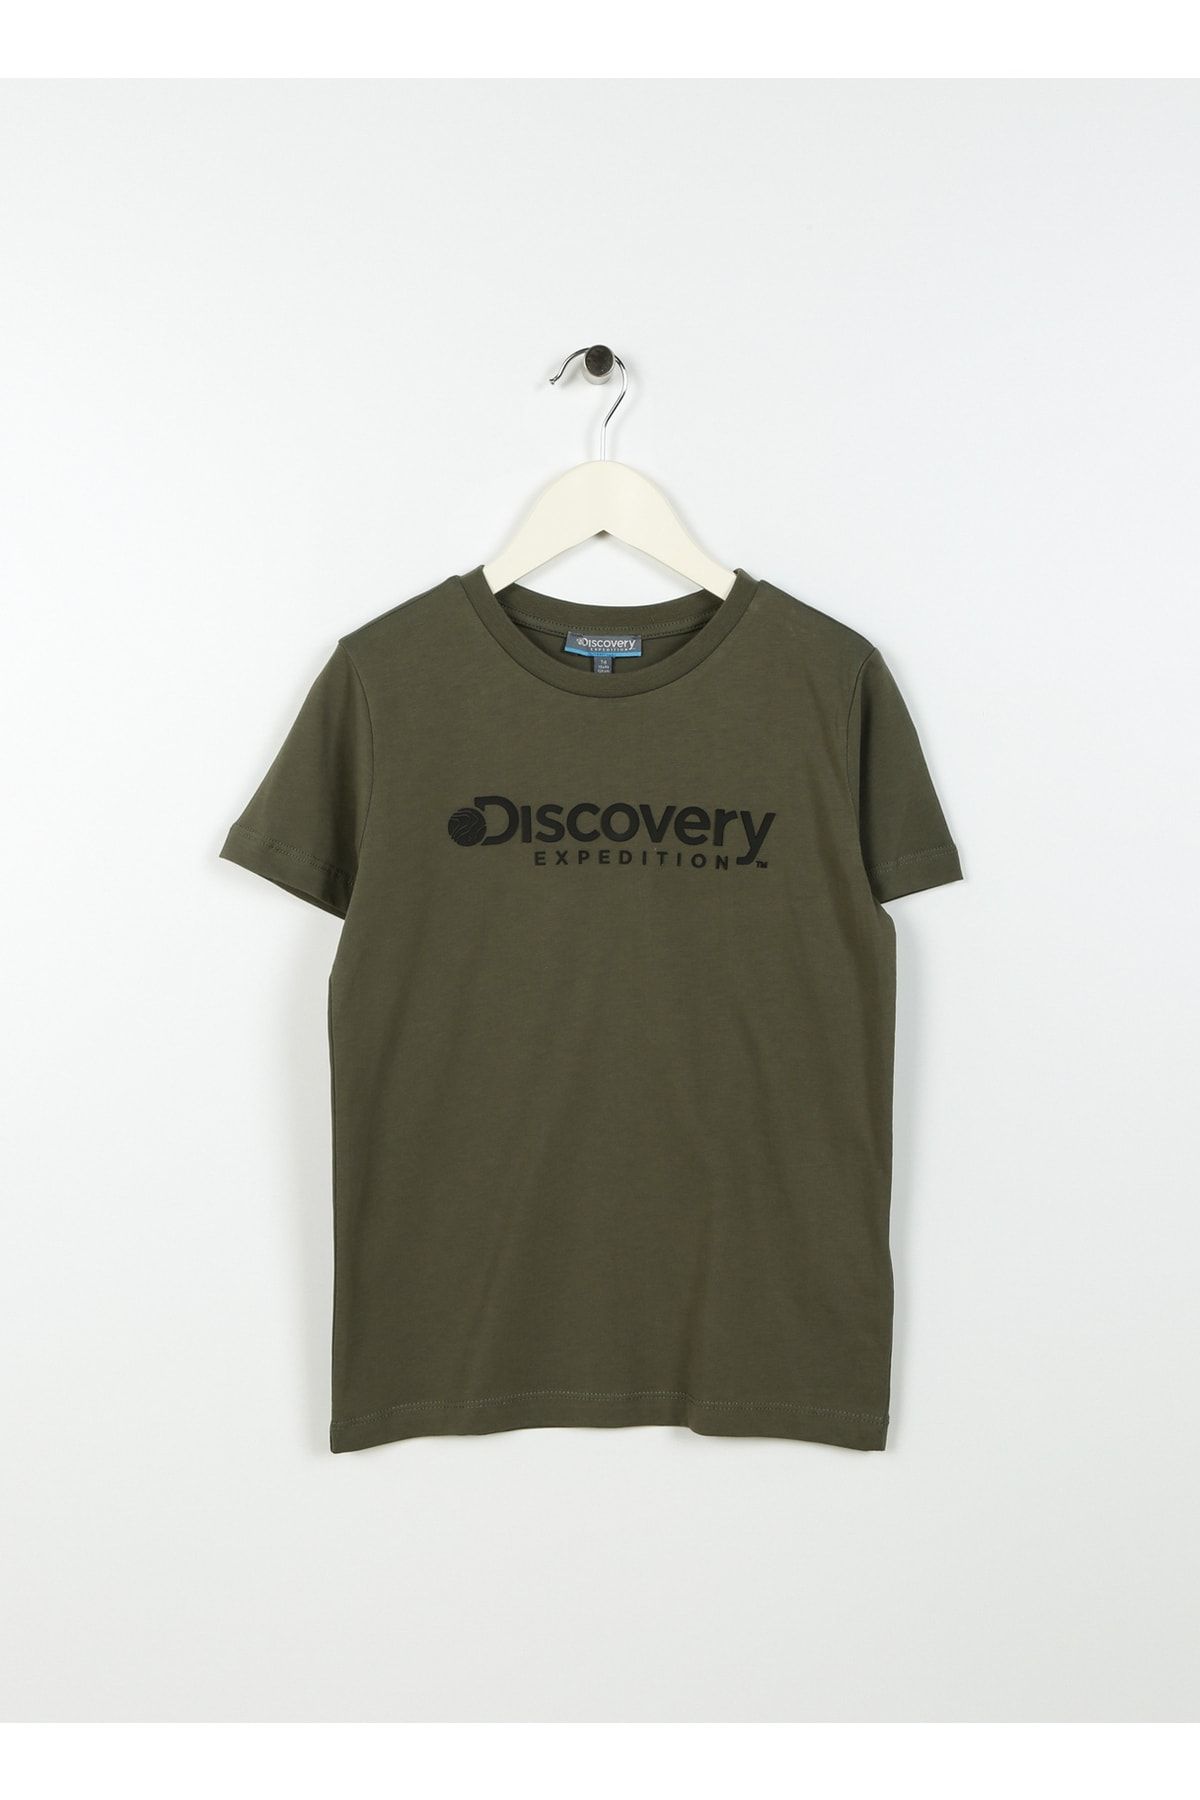 Discovery Expedition Baskılı Haki Erkek Çocuk T-shirt Rogers Boy